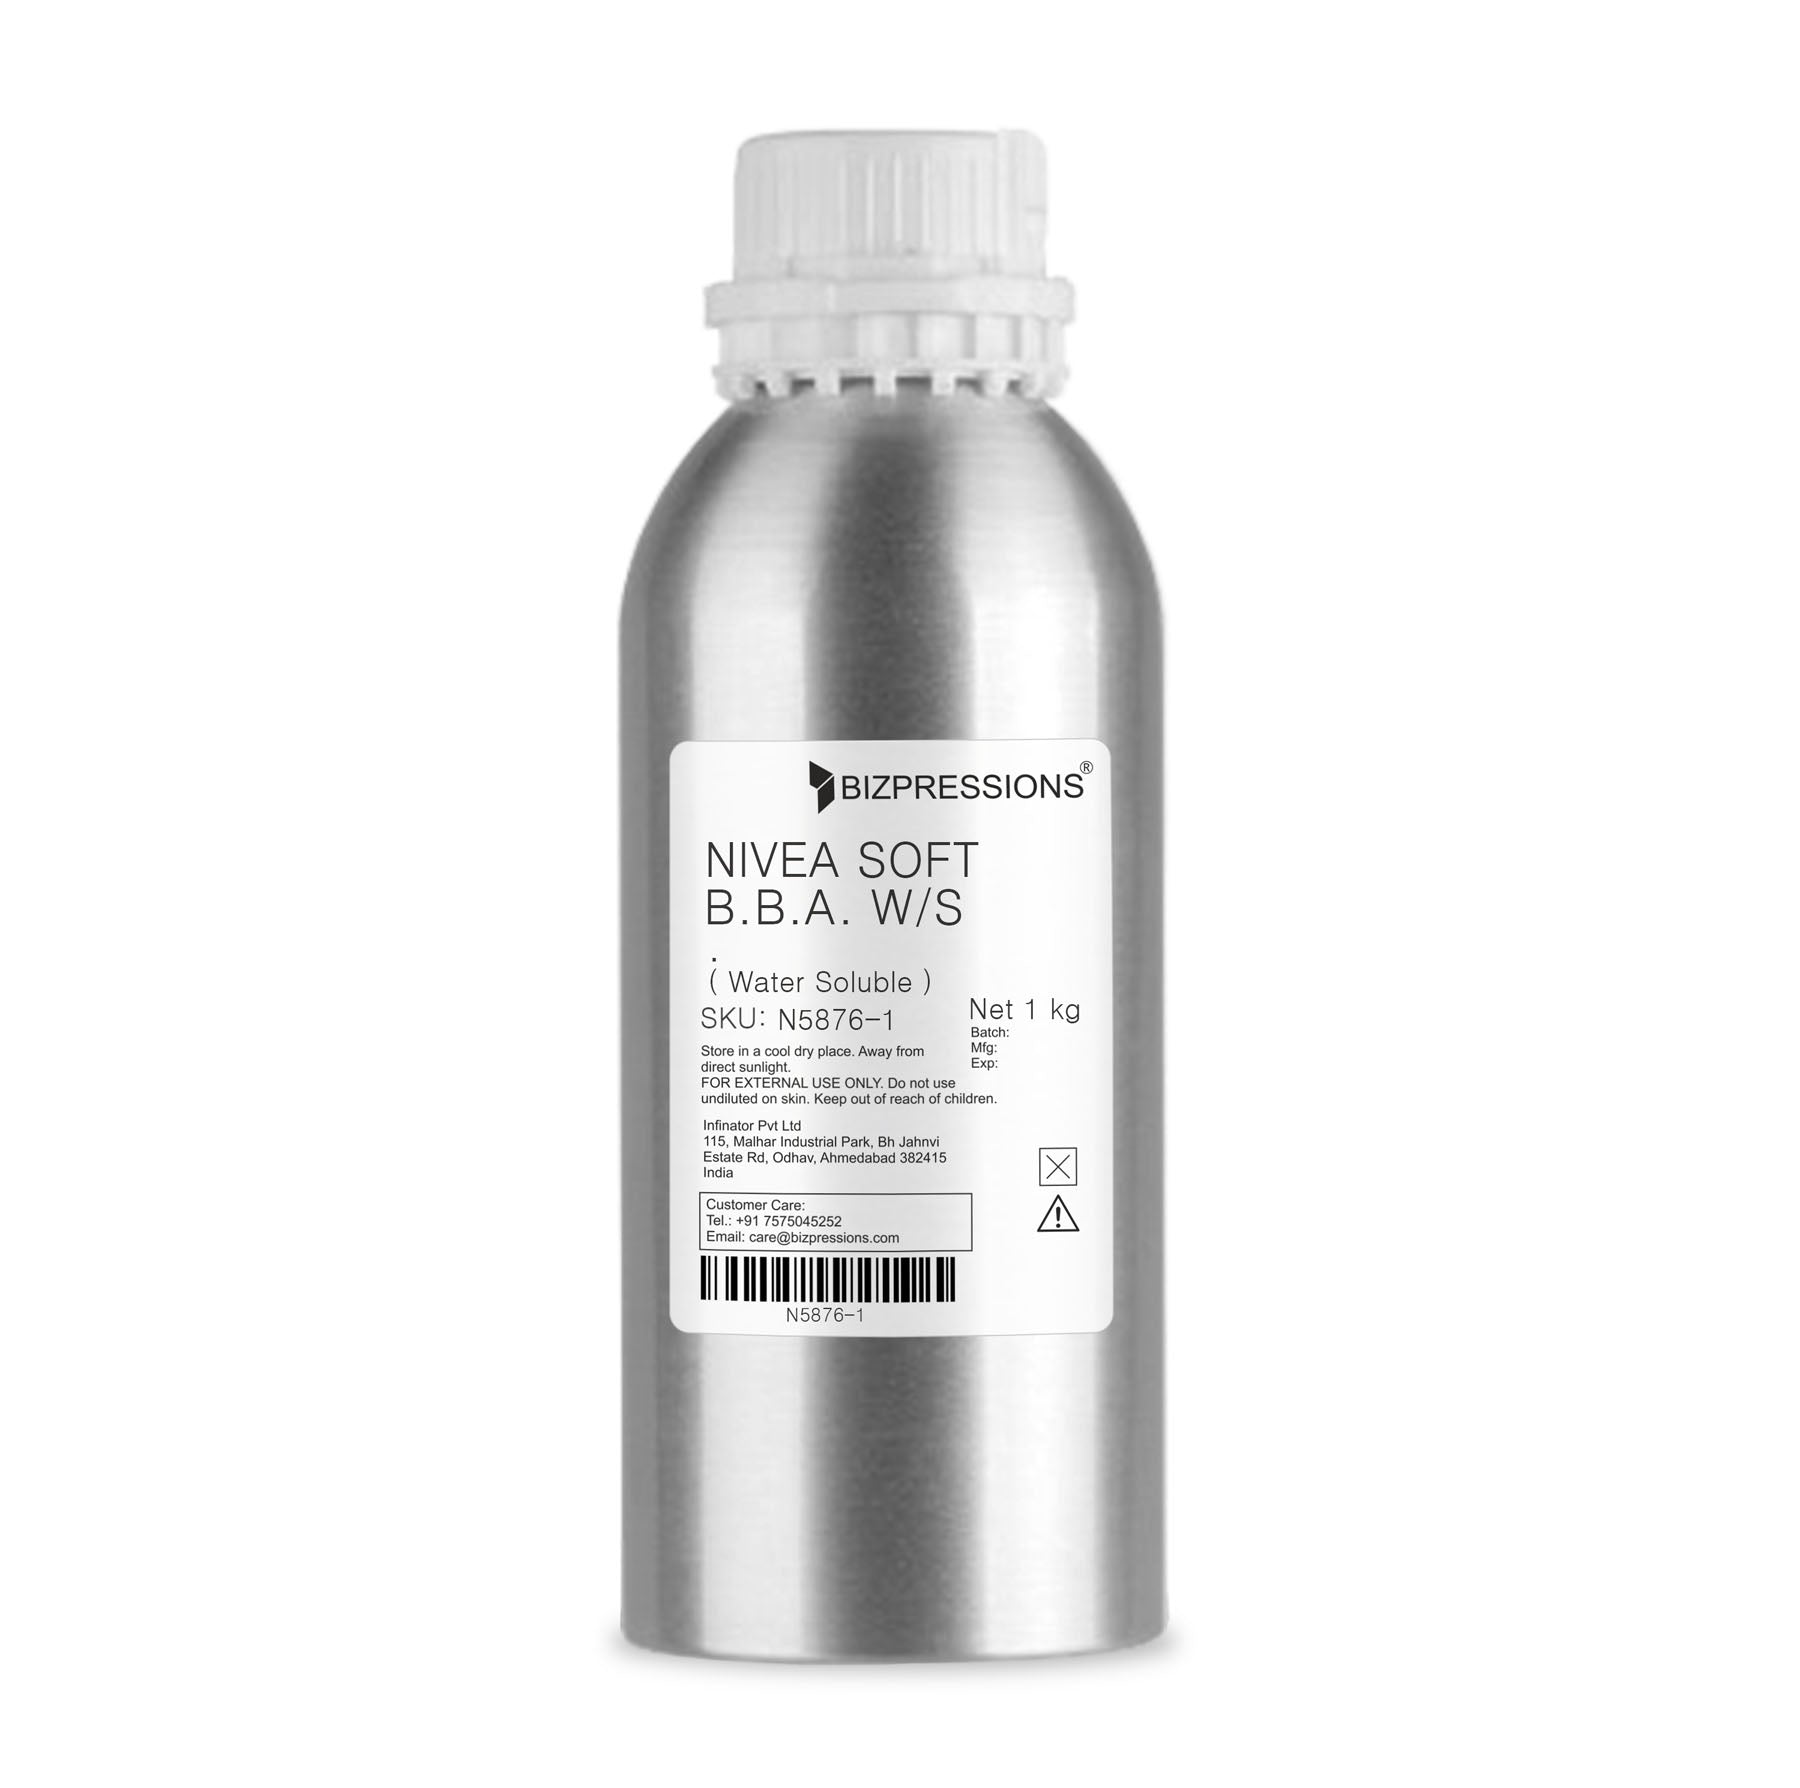 NIVEA SOFT B.B.A. W/S - Fragrance ( Water Soluble ) - 1 kg